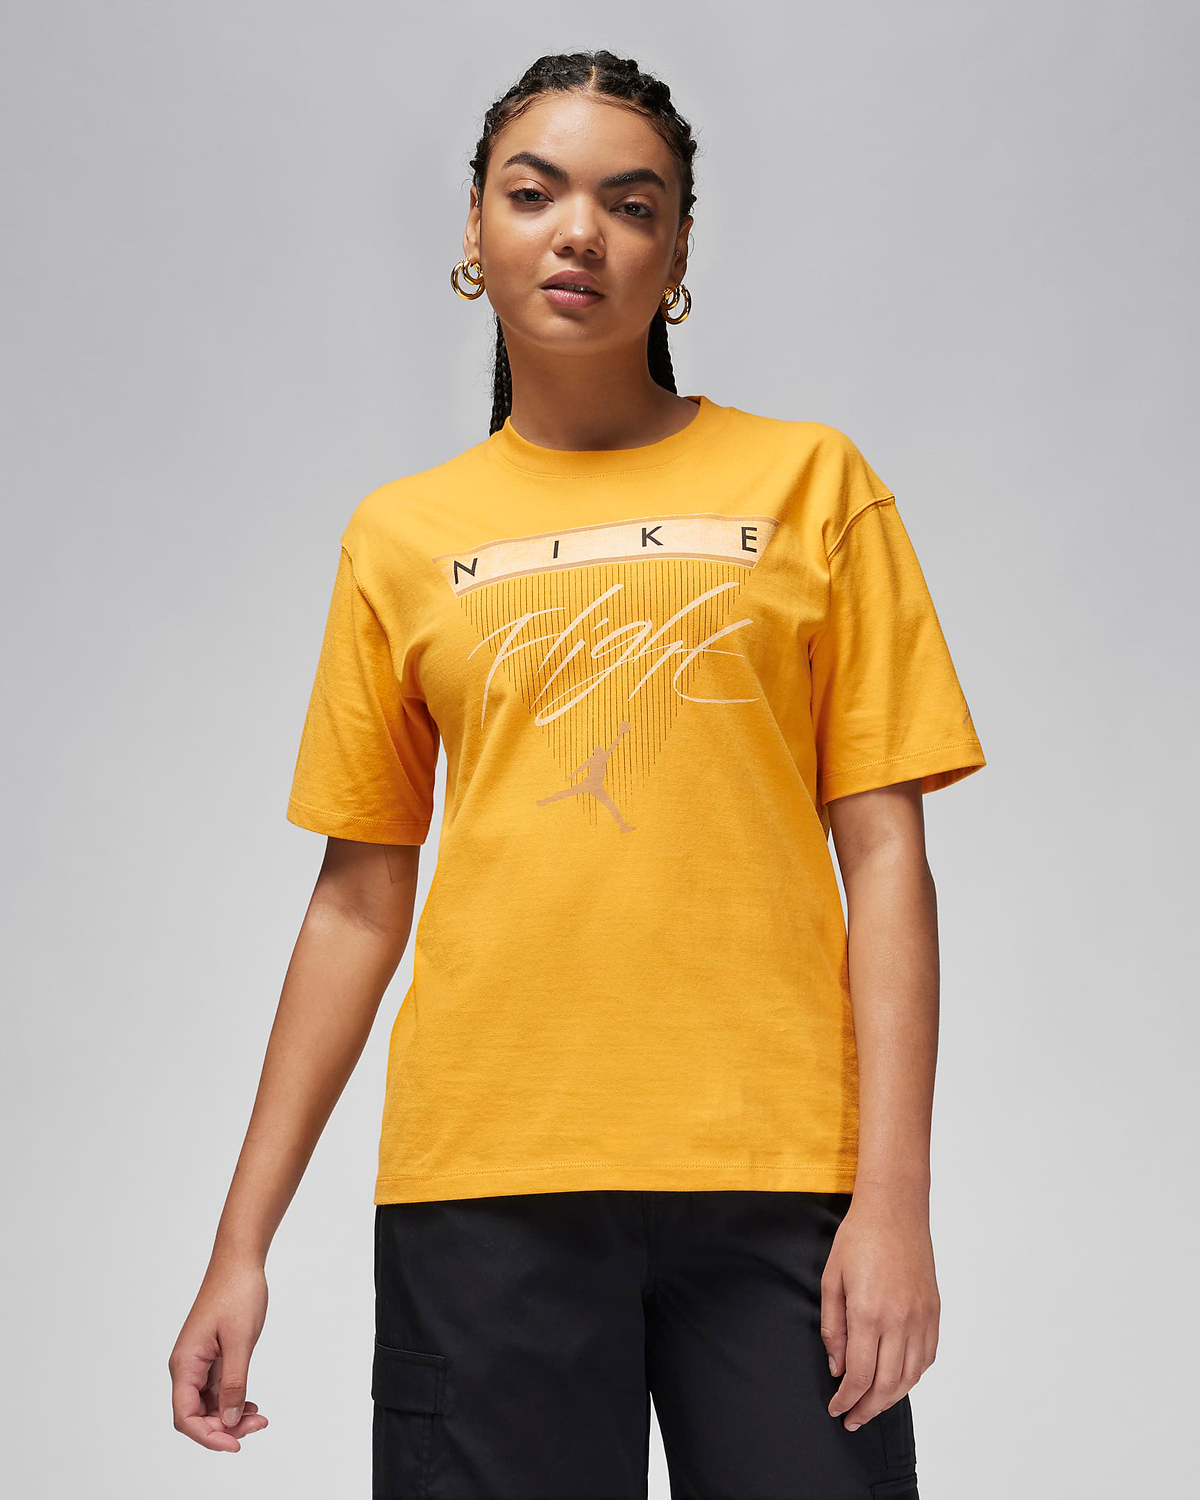 Air Jordan 1 Low Sail Pale Vanilla Yellow Ochre Shirt Outfit